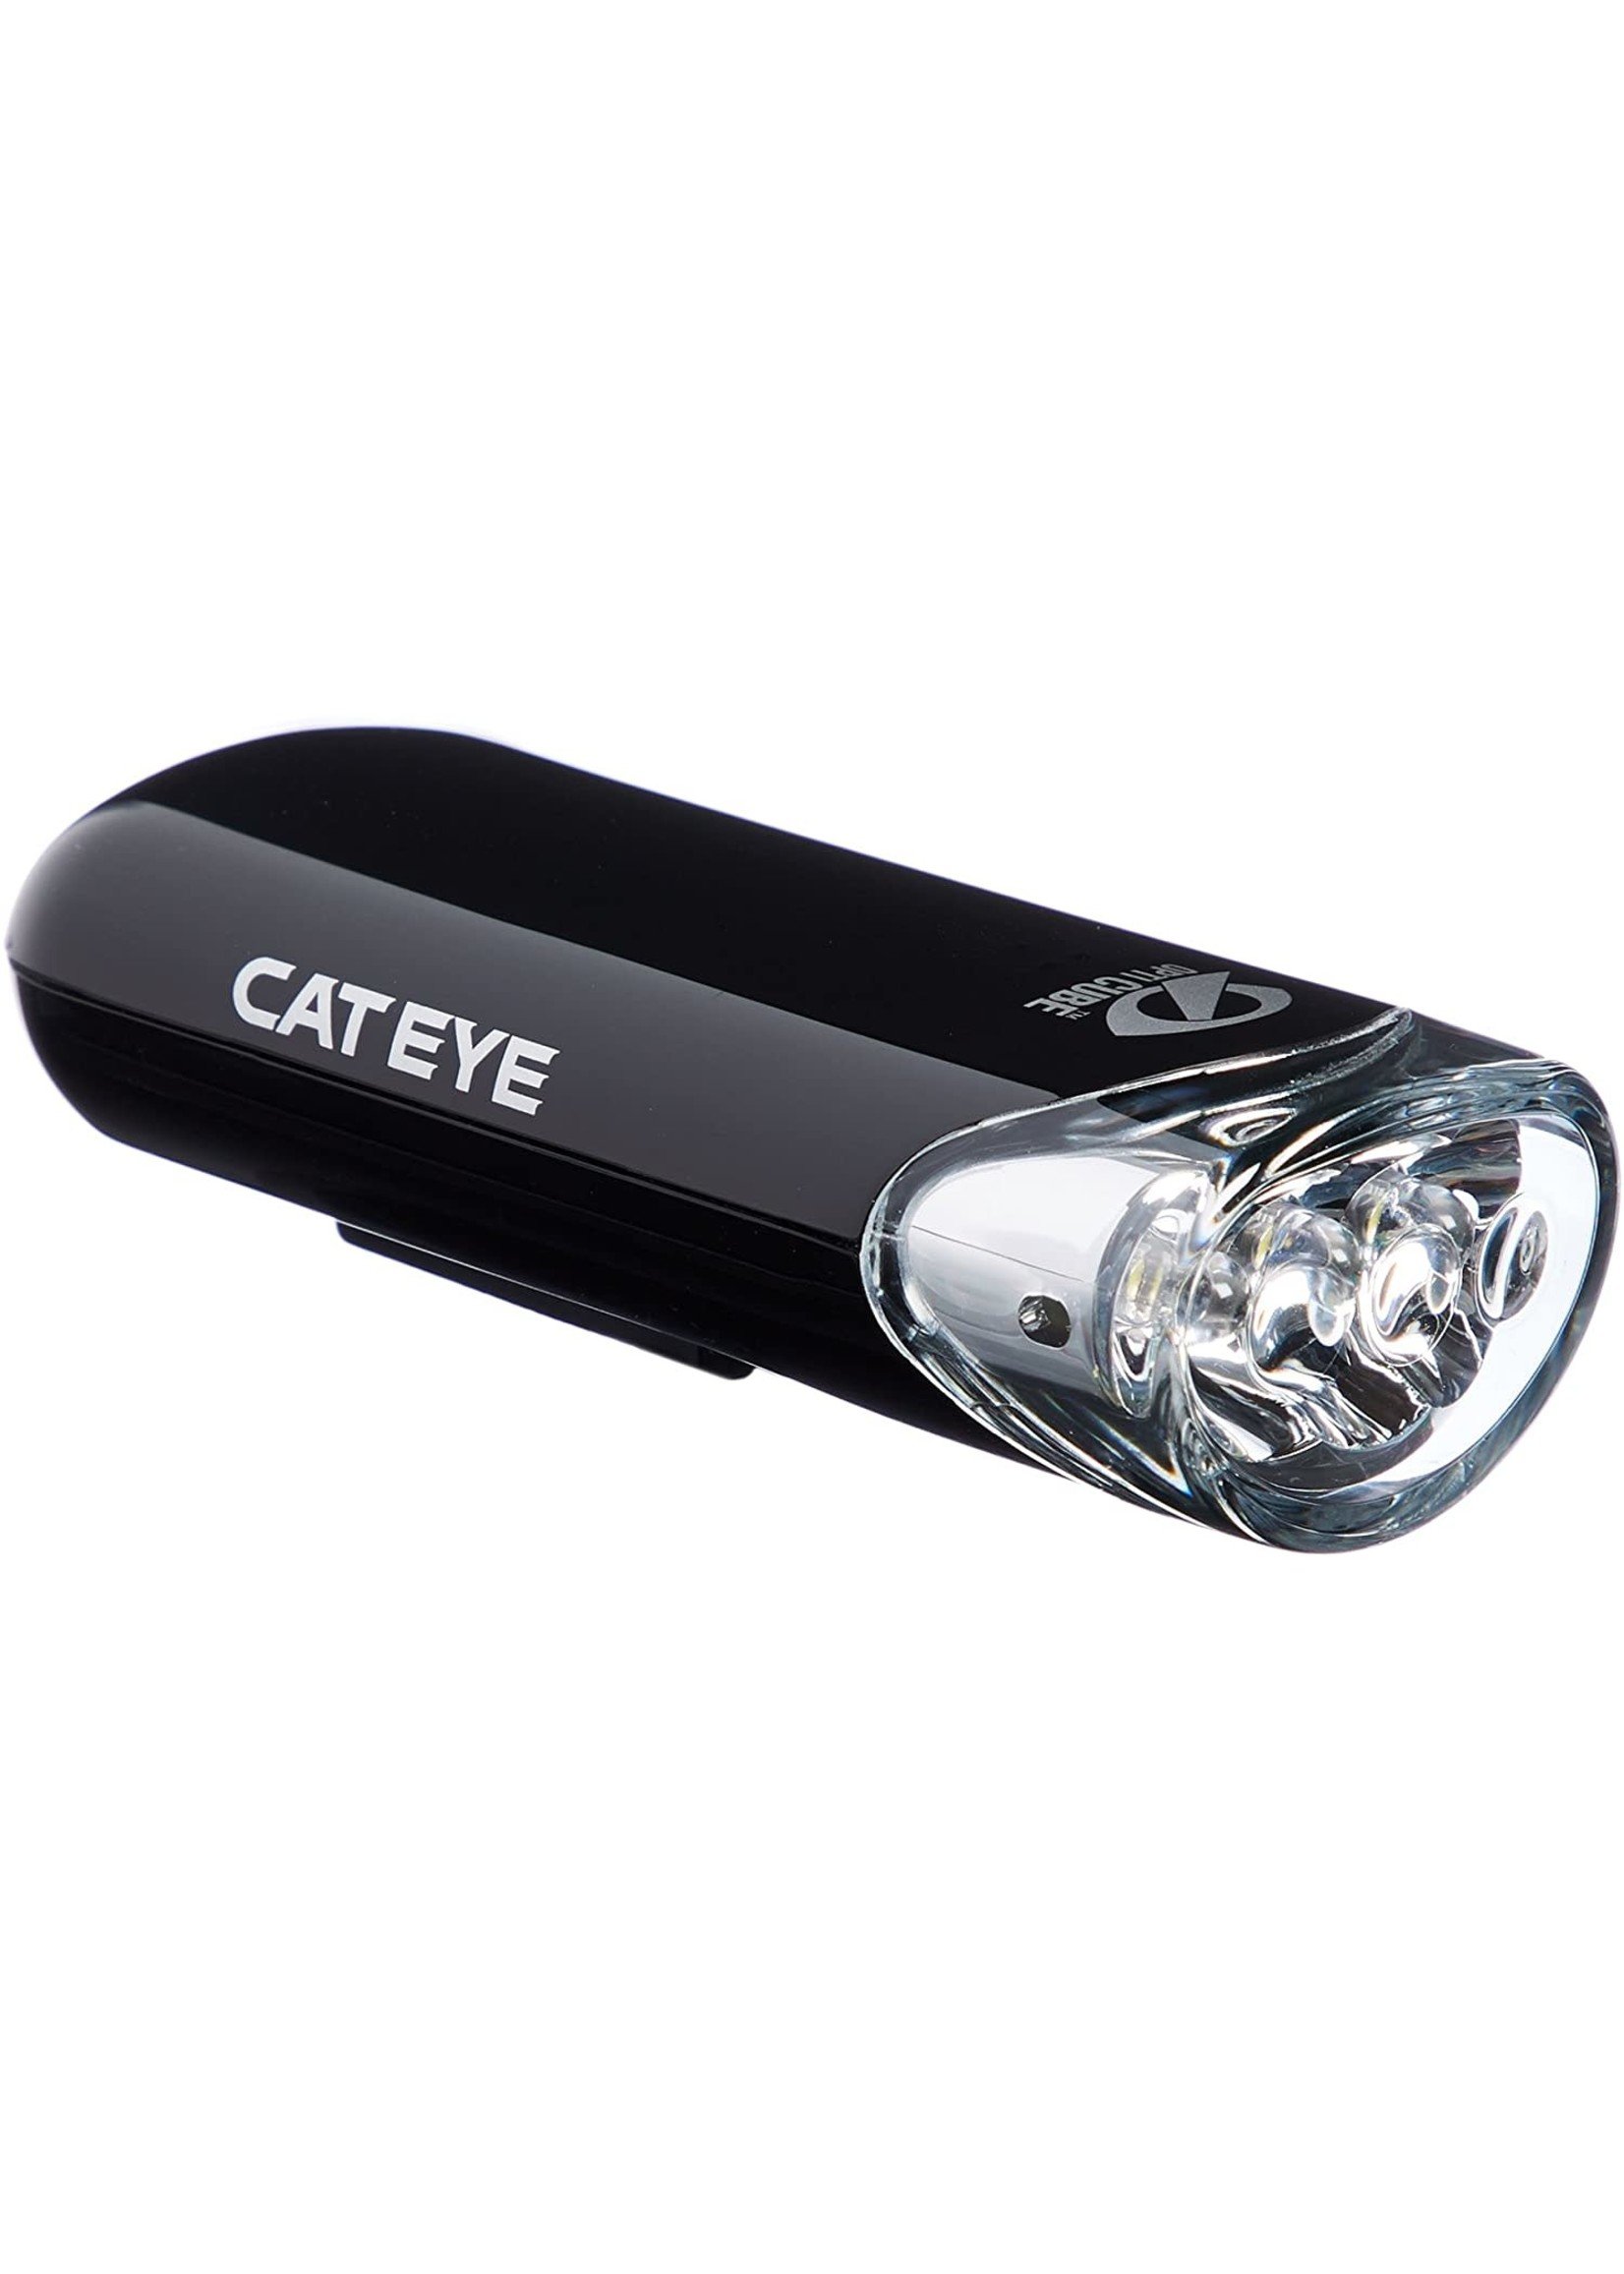 CATEYE CatEye HL-EL135 LED Headlight and Omni3 LED Taillight Set: Black